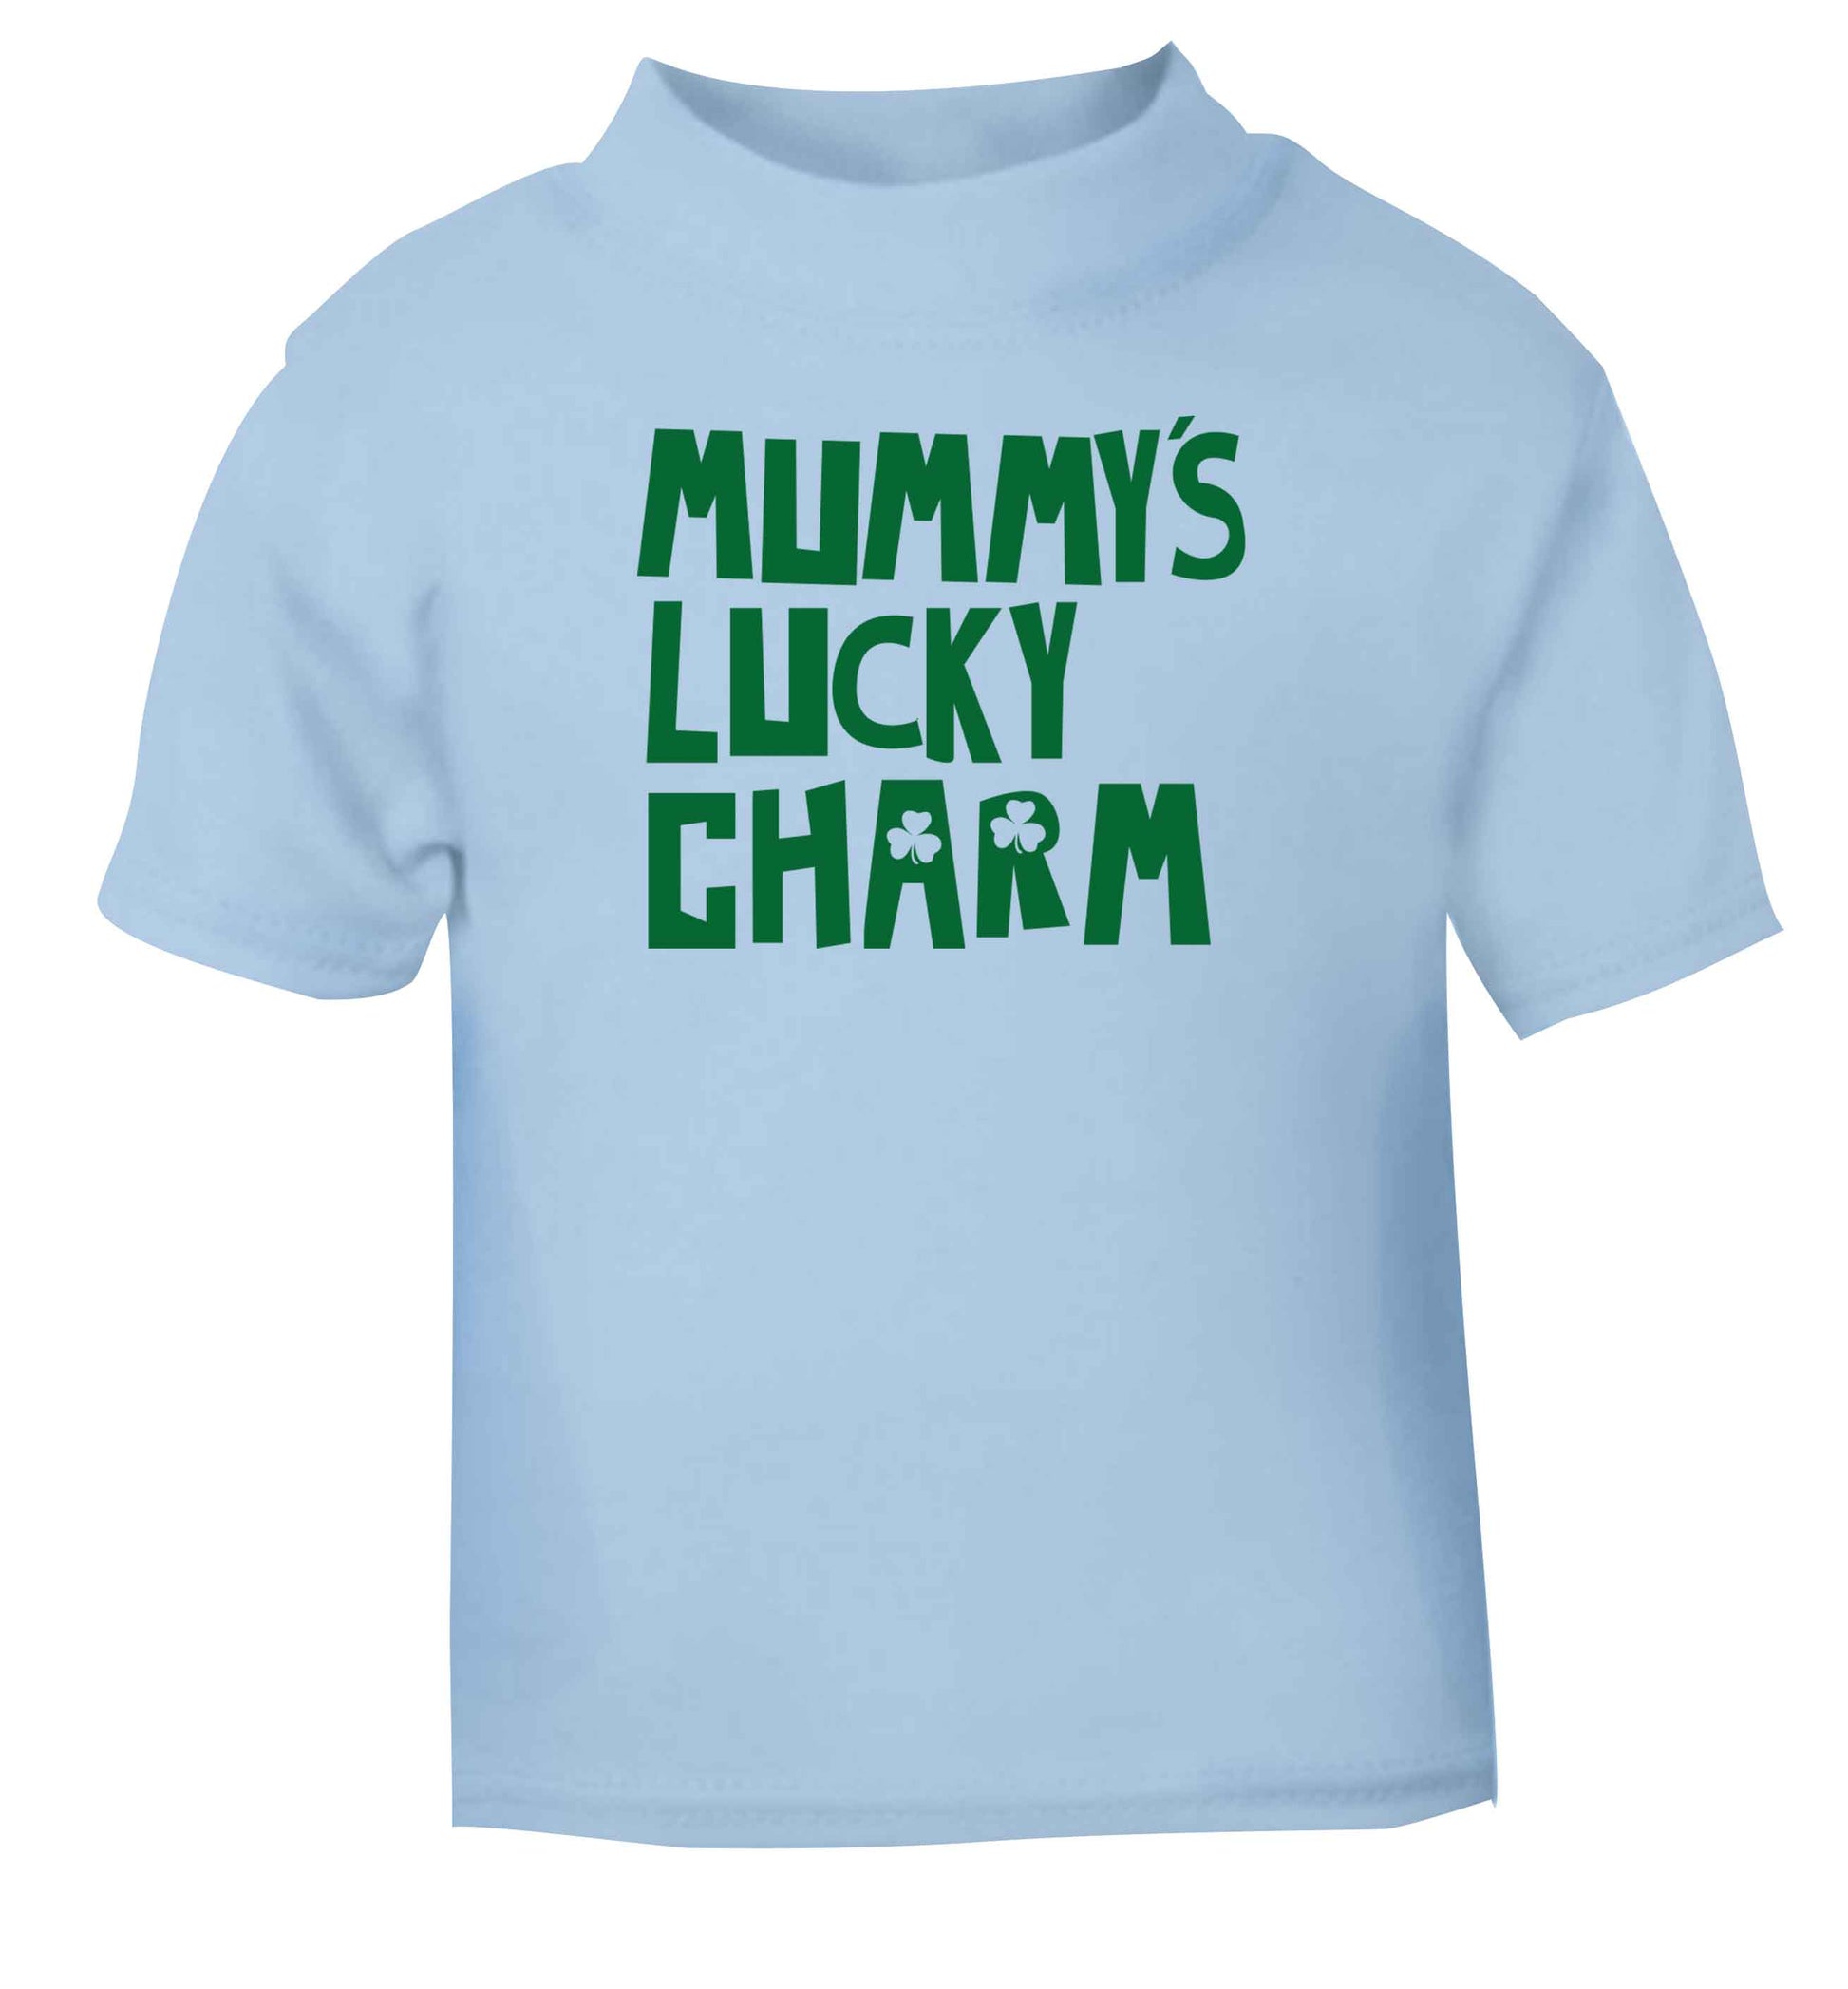 Mummy's lucky charm light blue baby toddler Tshirt 2 Years